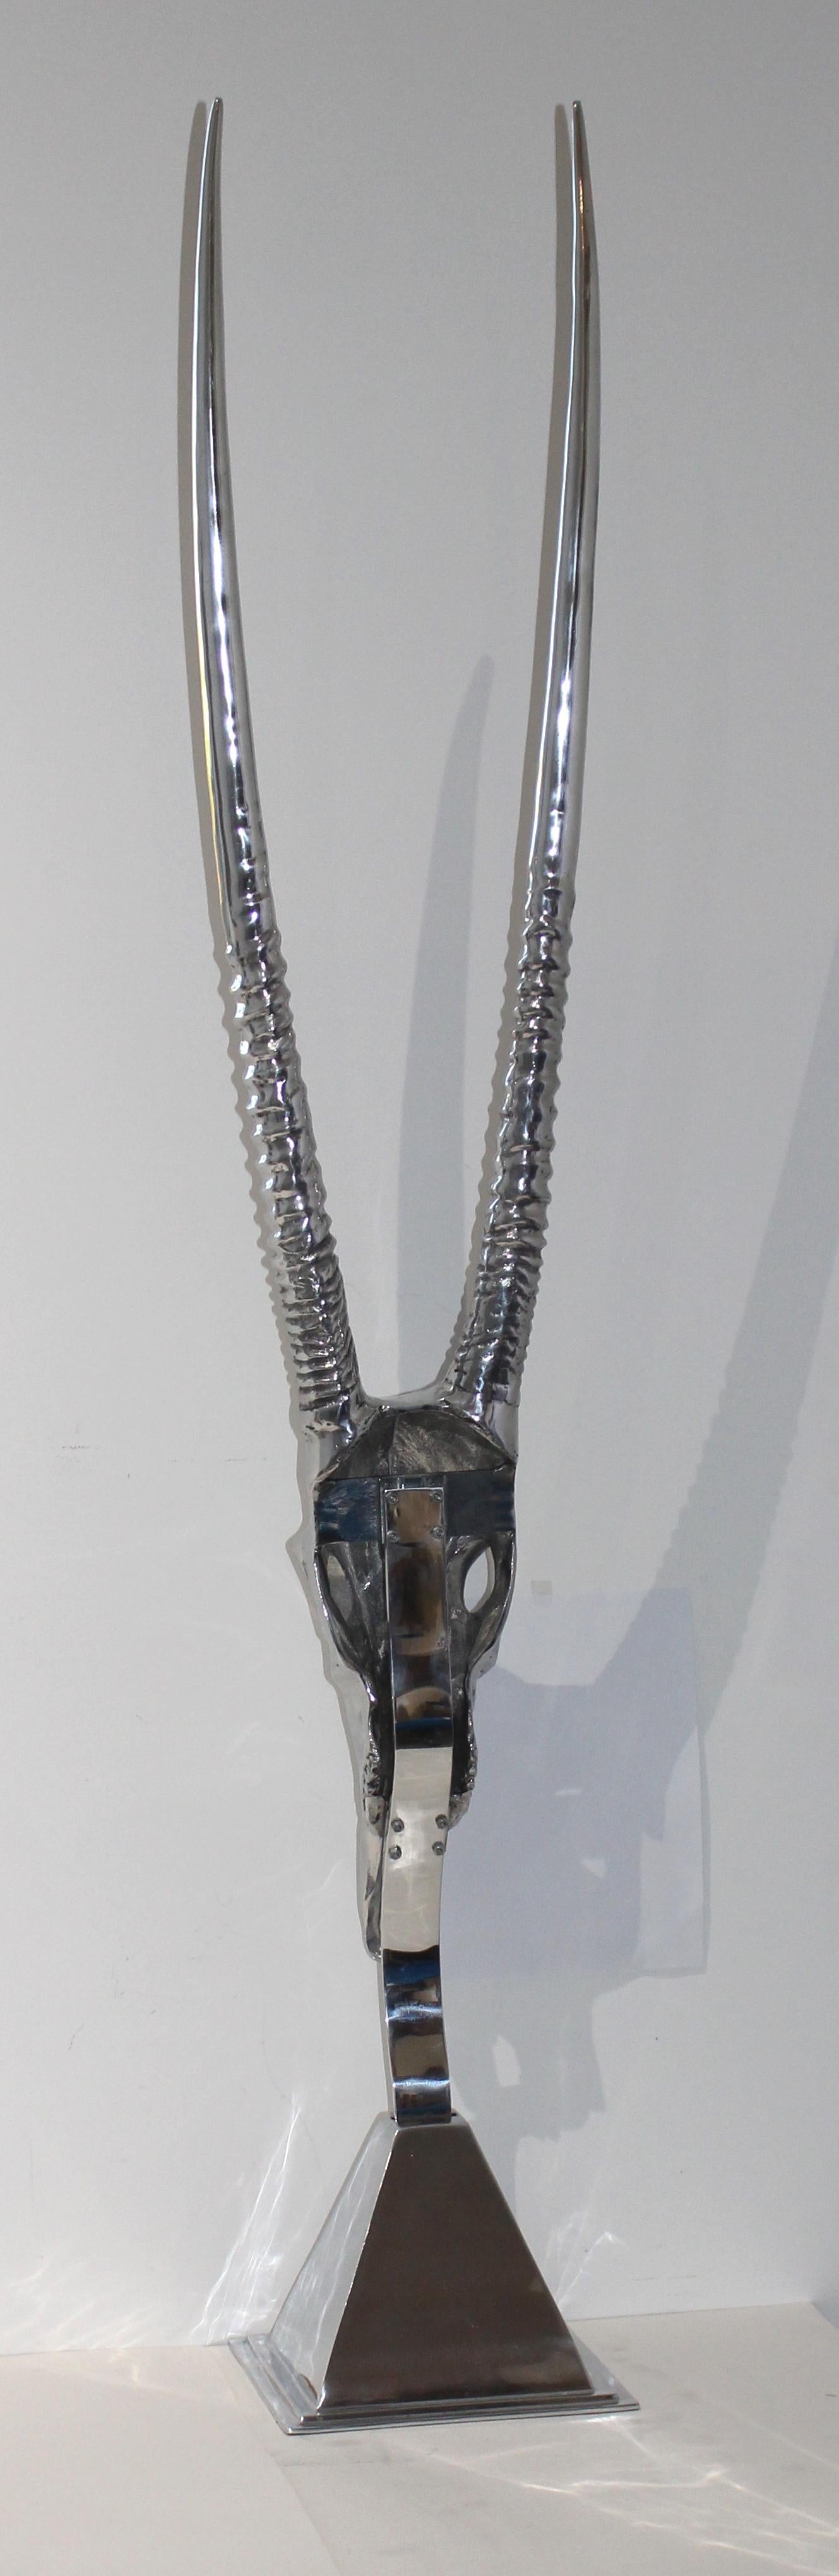 Aluminum Sculpture of a Gazelle Skull by Arthur Court For Sale 1